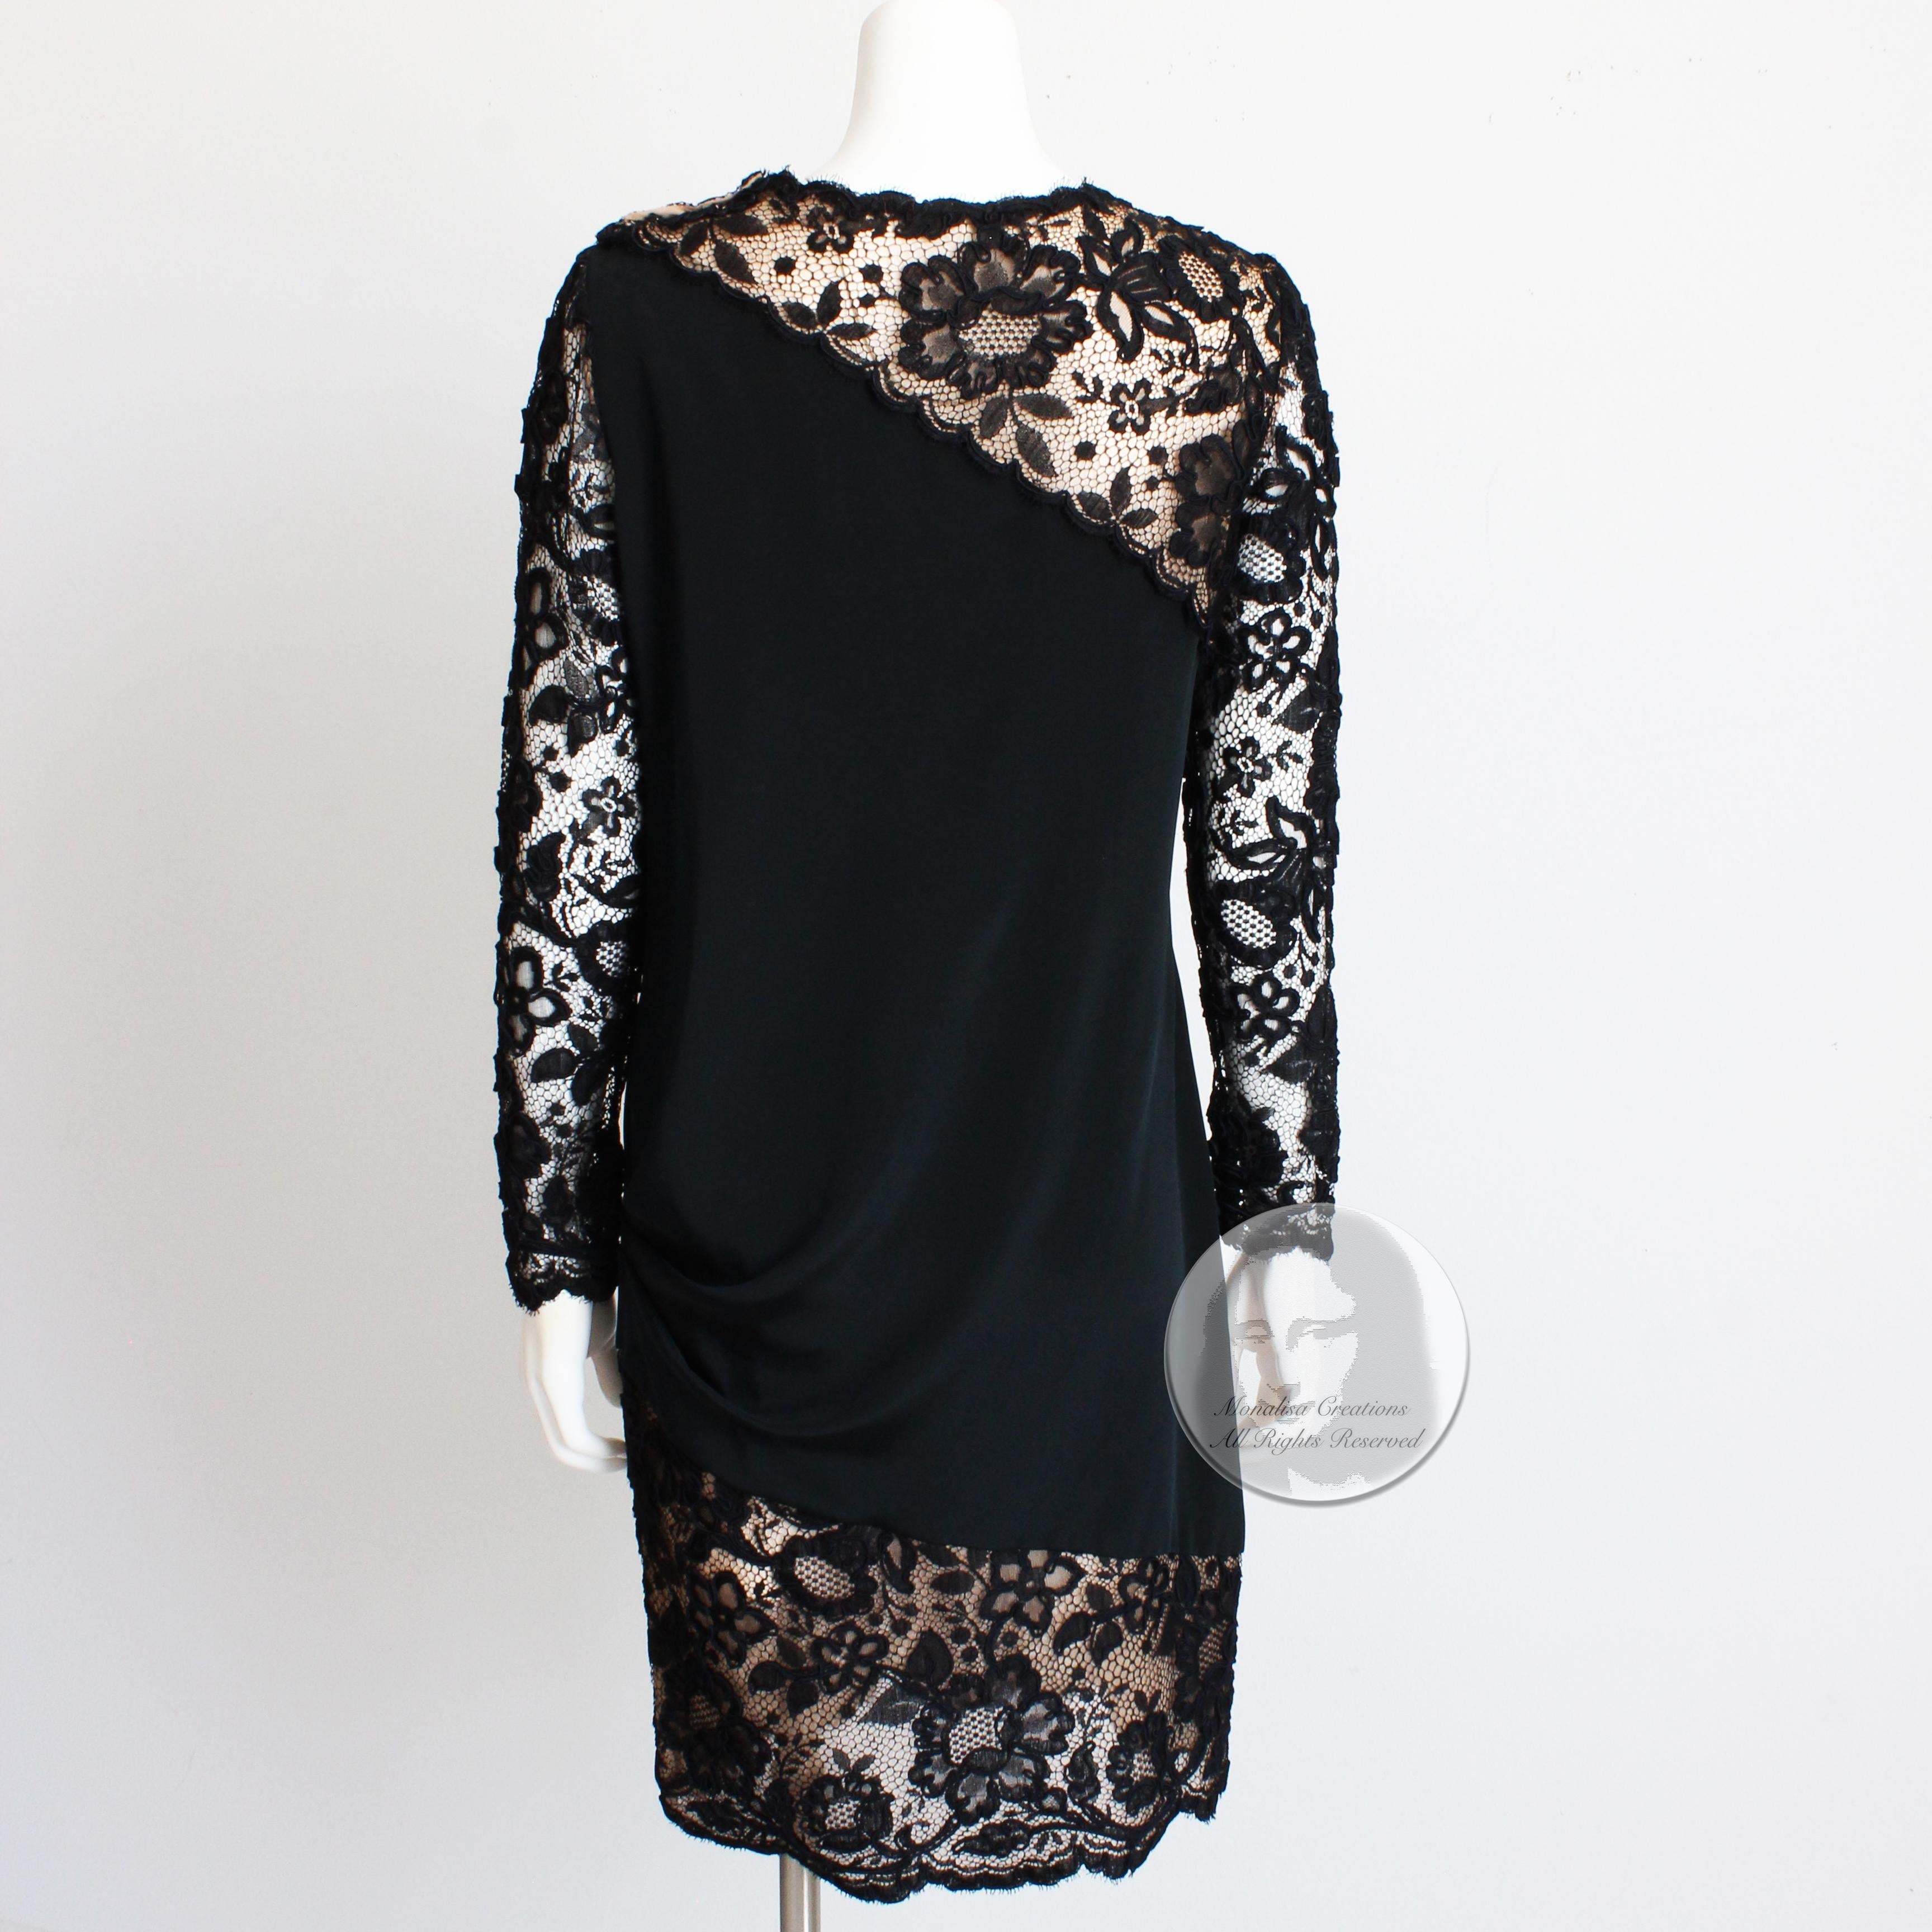 Bill Blass Cocktail Dress Black Illusion Lace Formal 70s Little Black Dress  For Sale 1